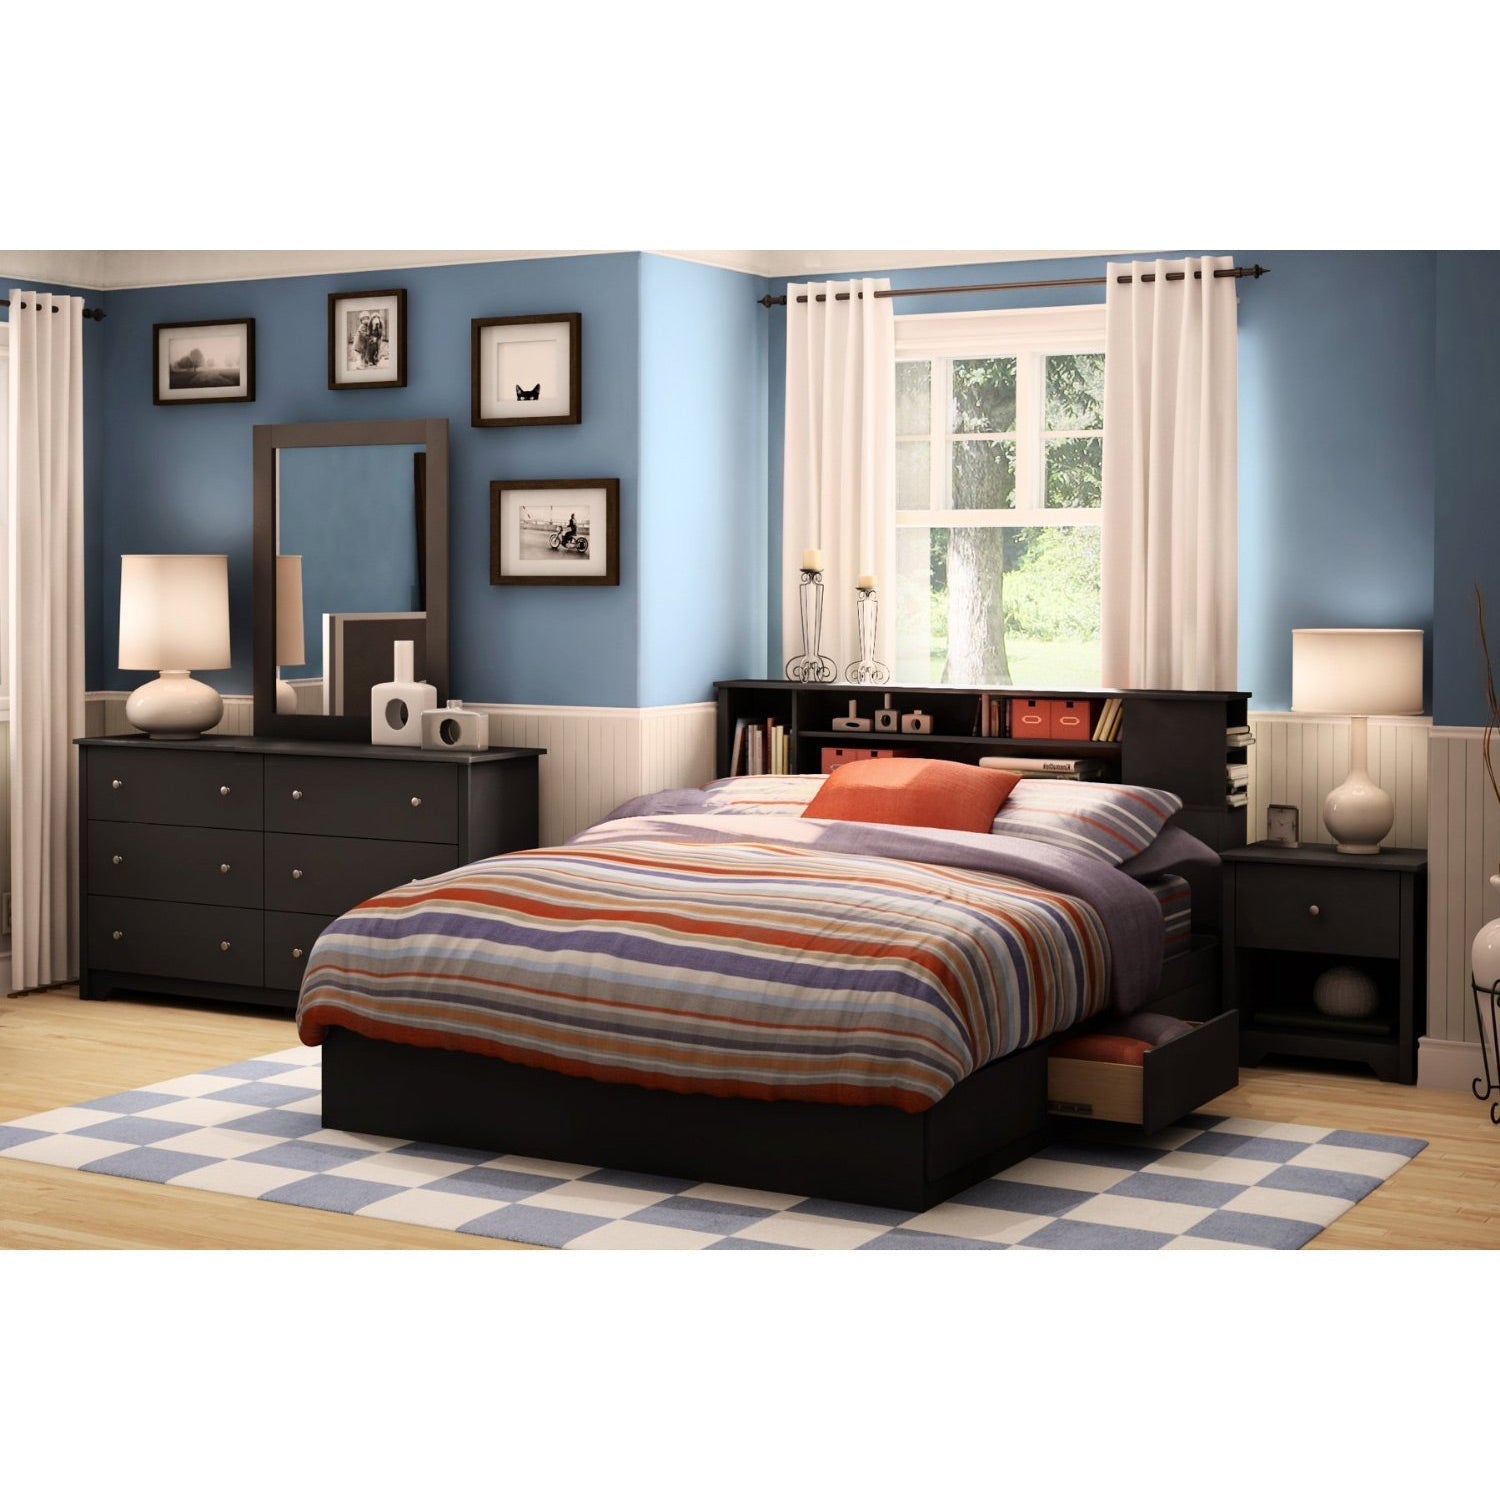 Bedroom > Nightstand And Dressers - Black 6 Drawer Bedroom Dresser With Nickle Metal Knobs Handles